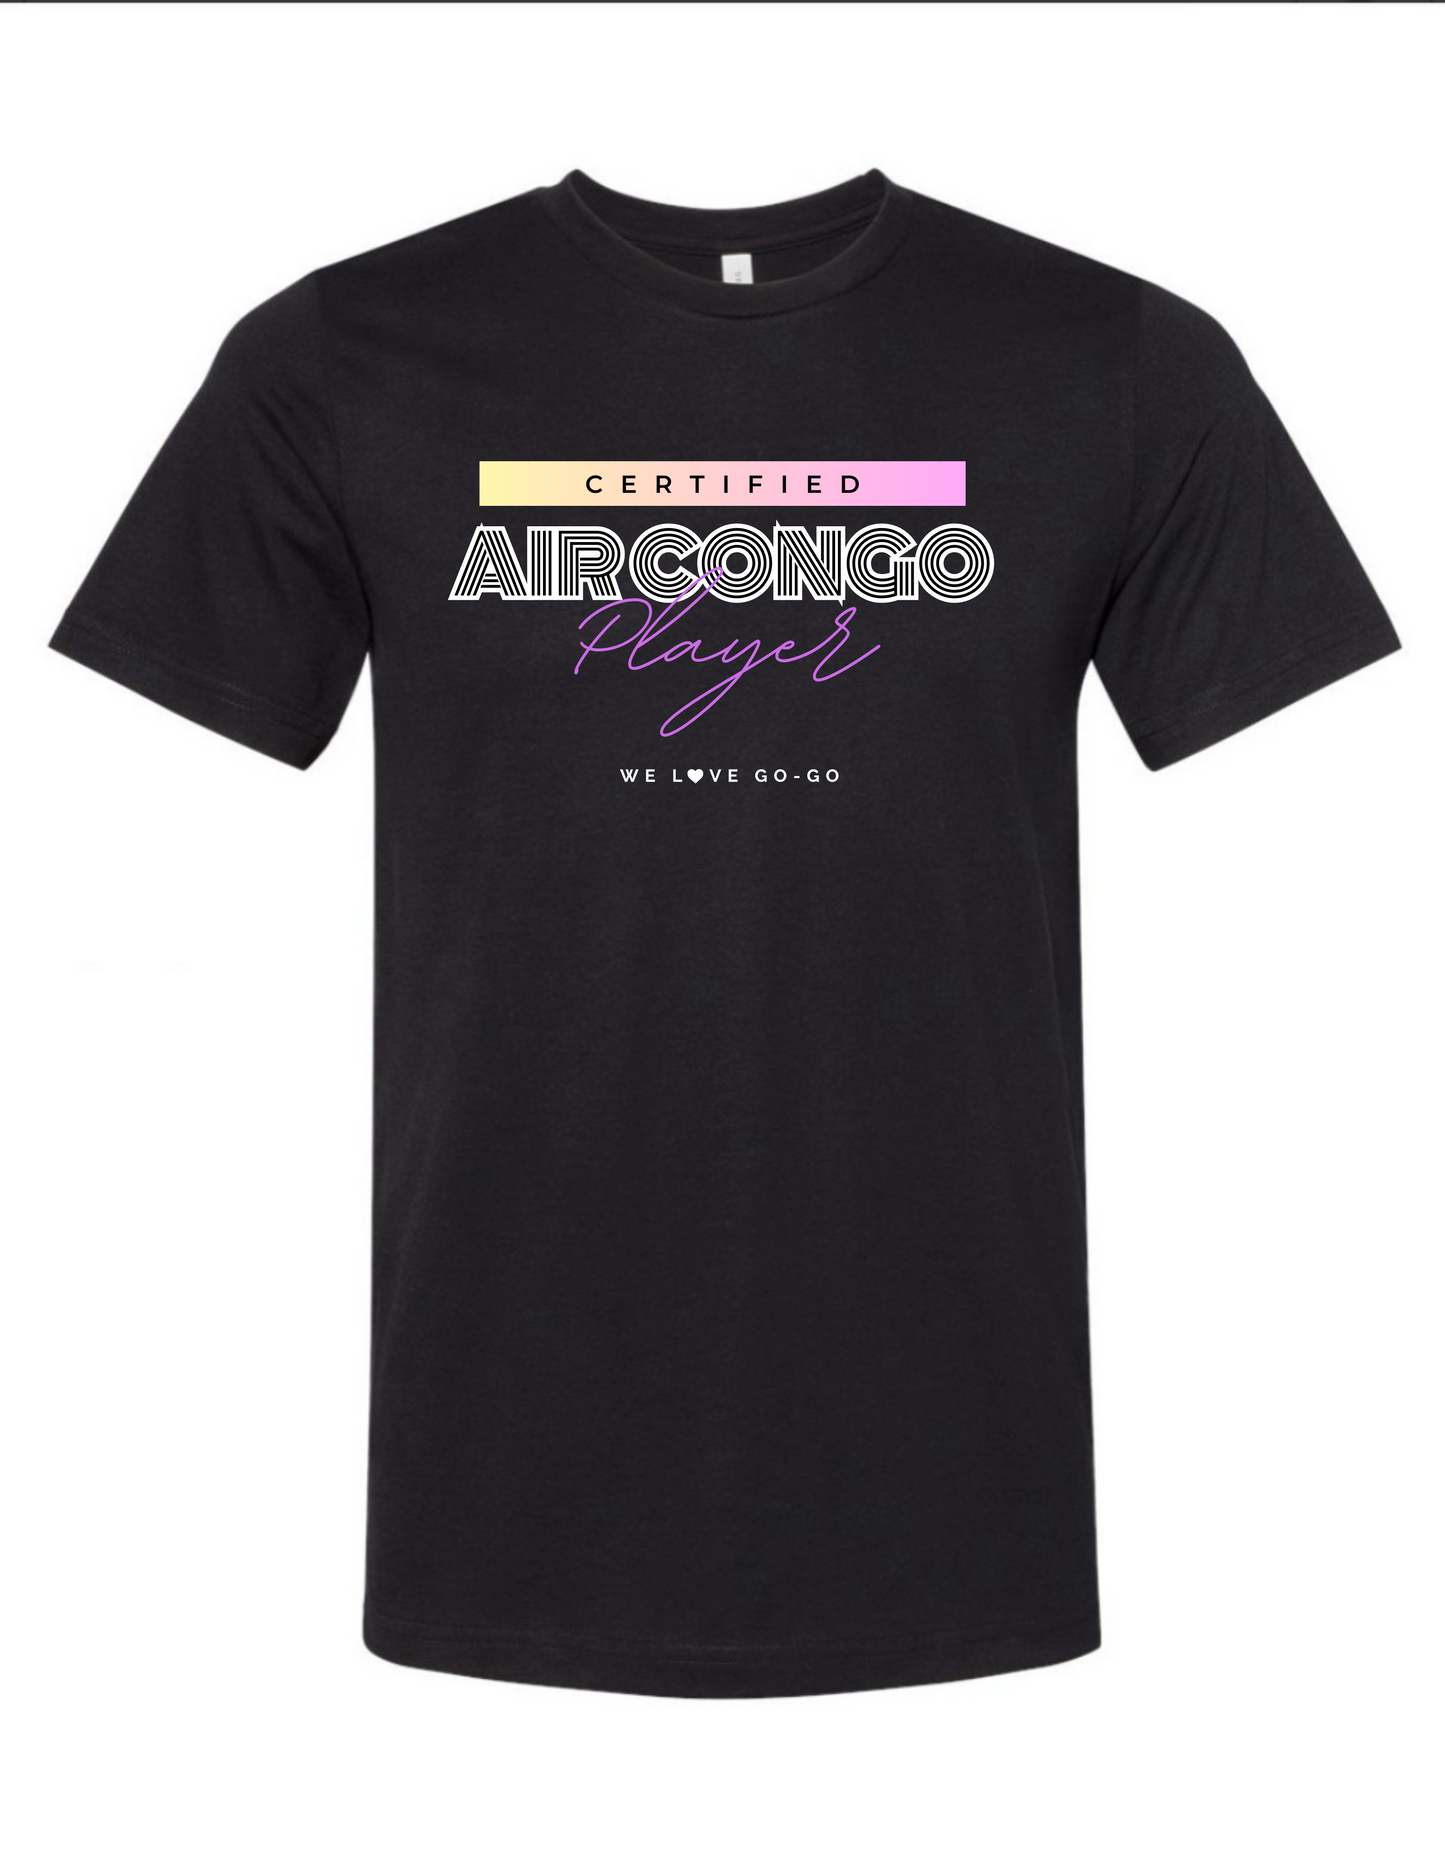 Certified Air Congo Player - T-Shirt